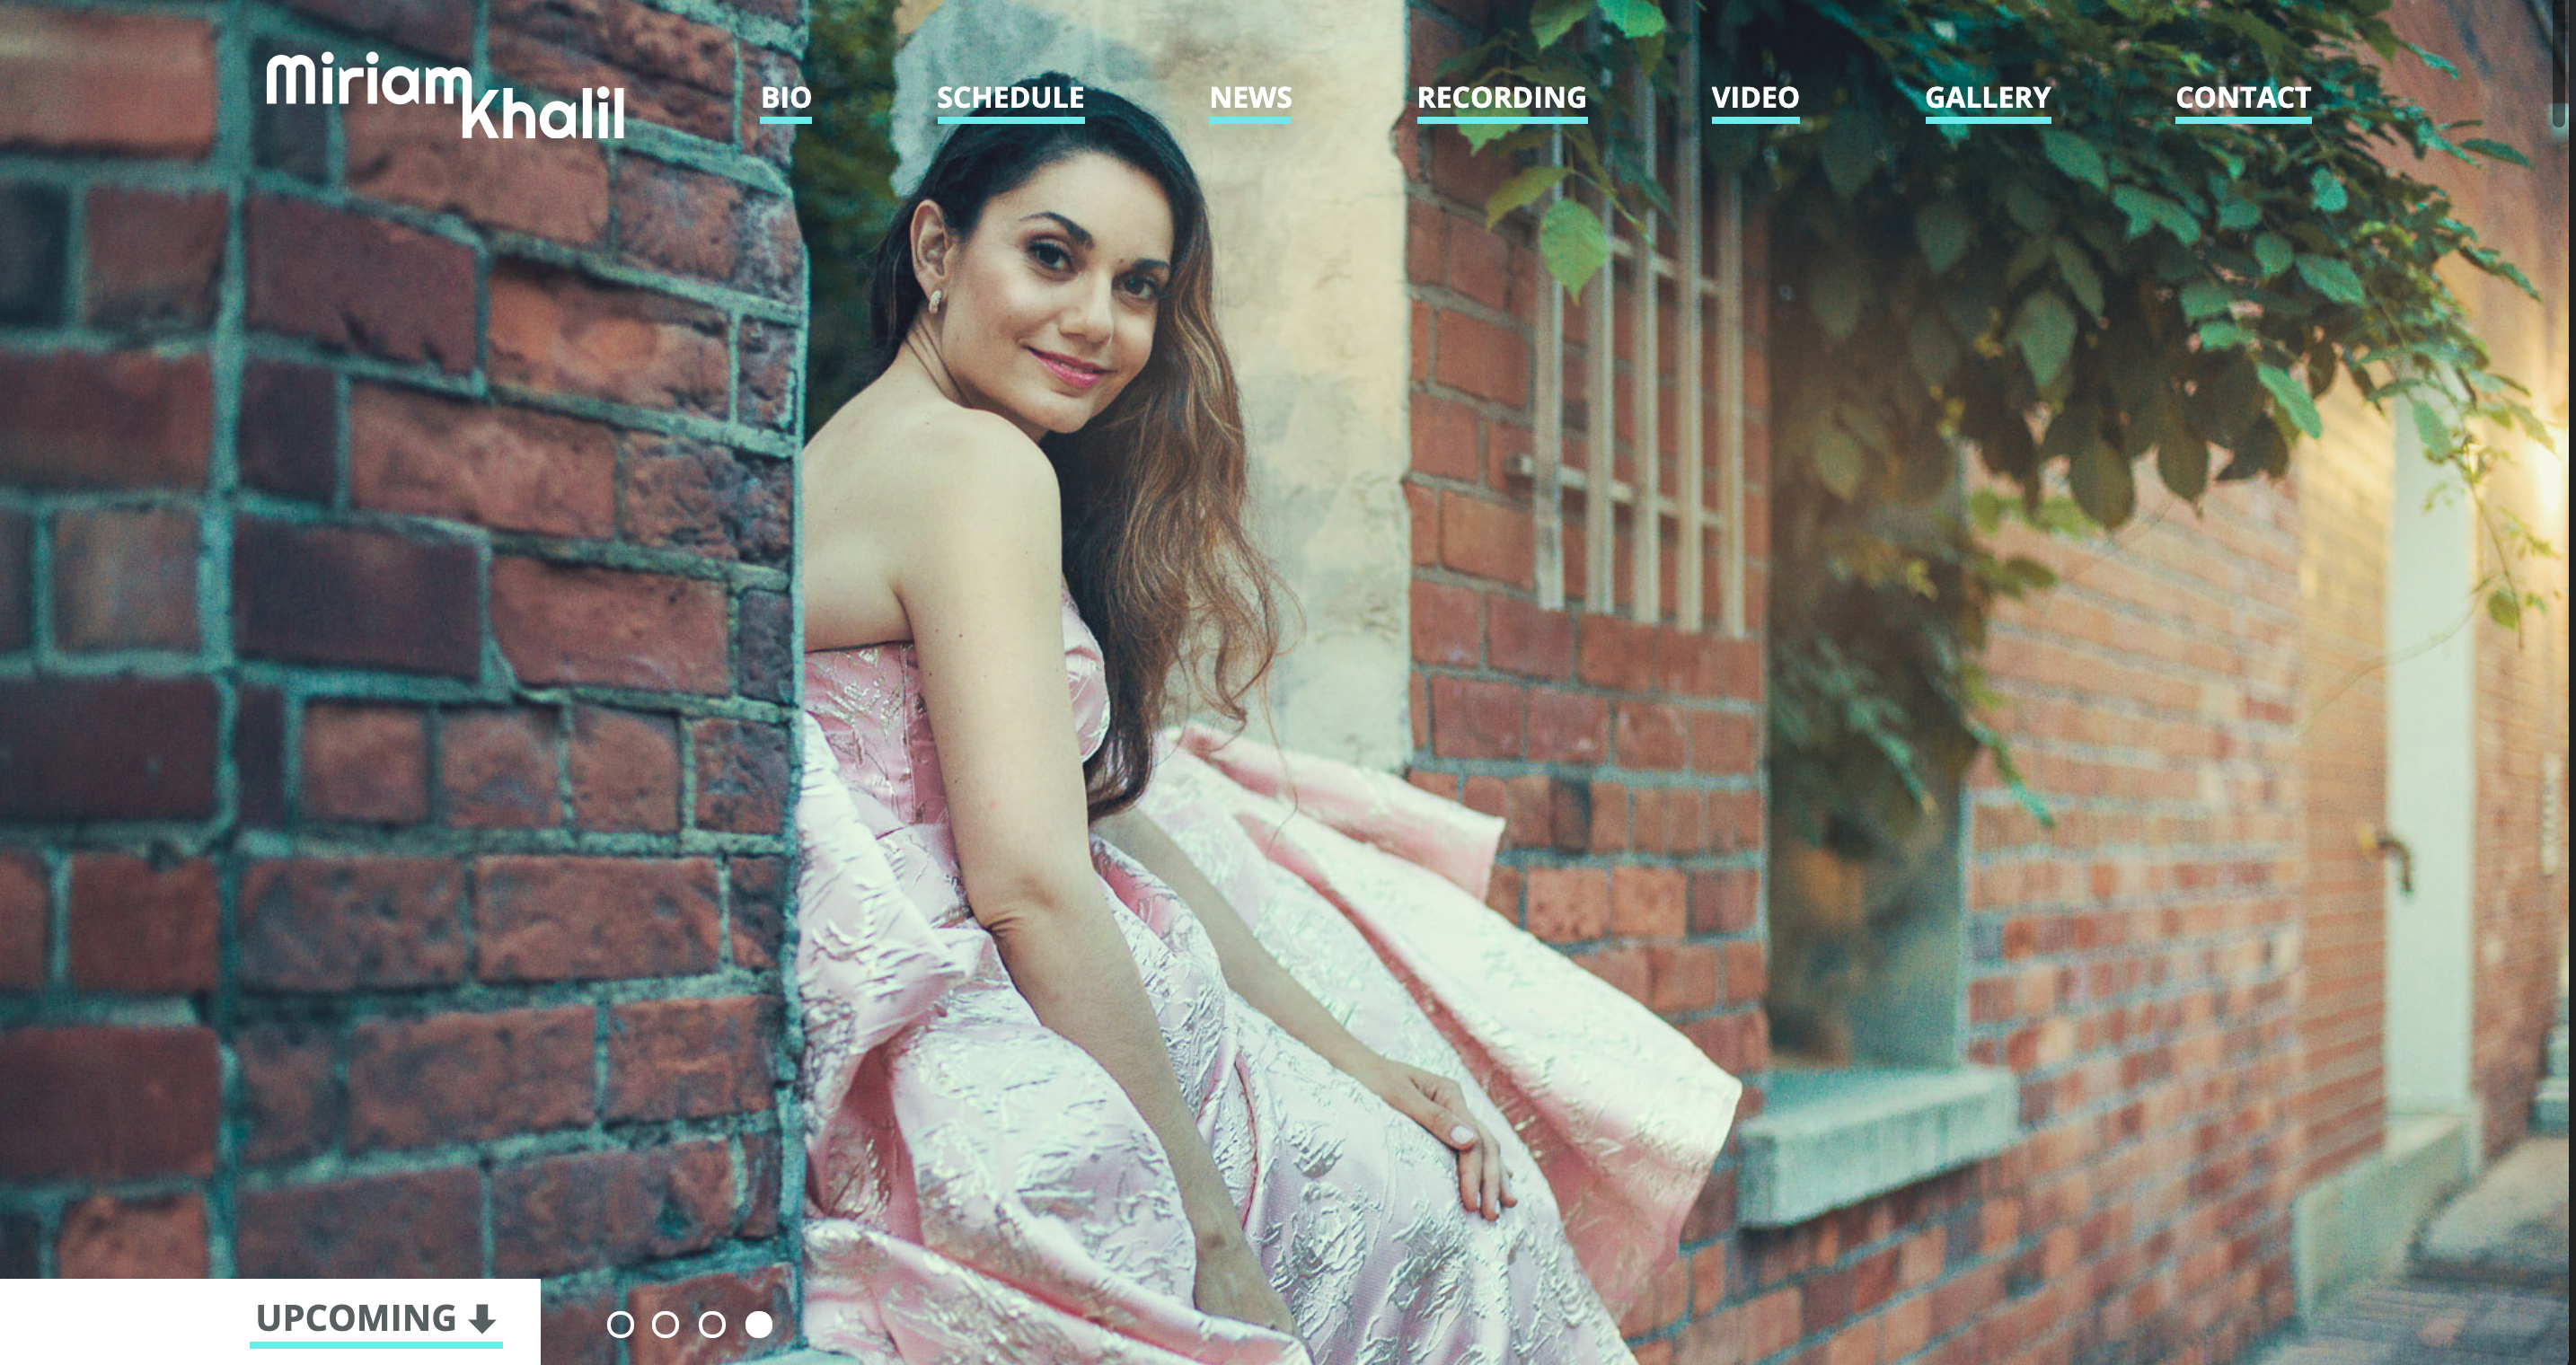 screenshot of opera singer Miriam Khalil's website